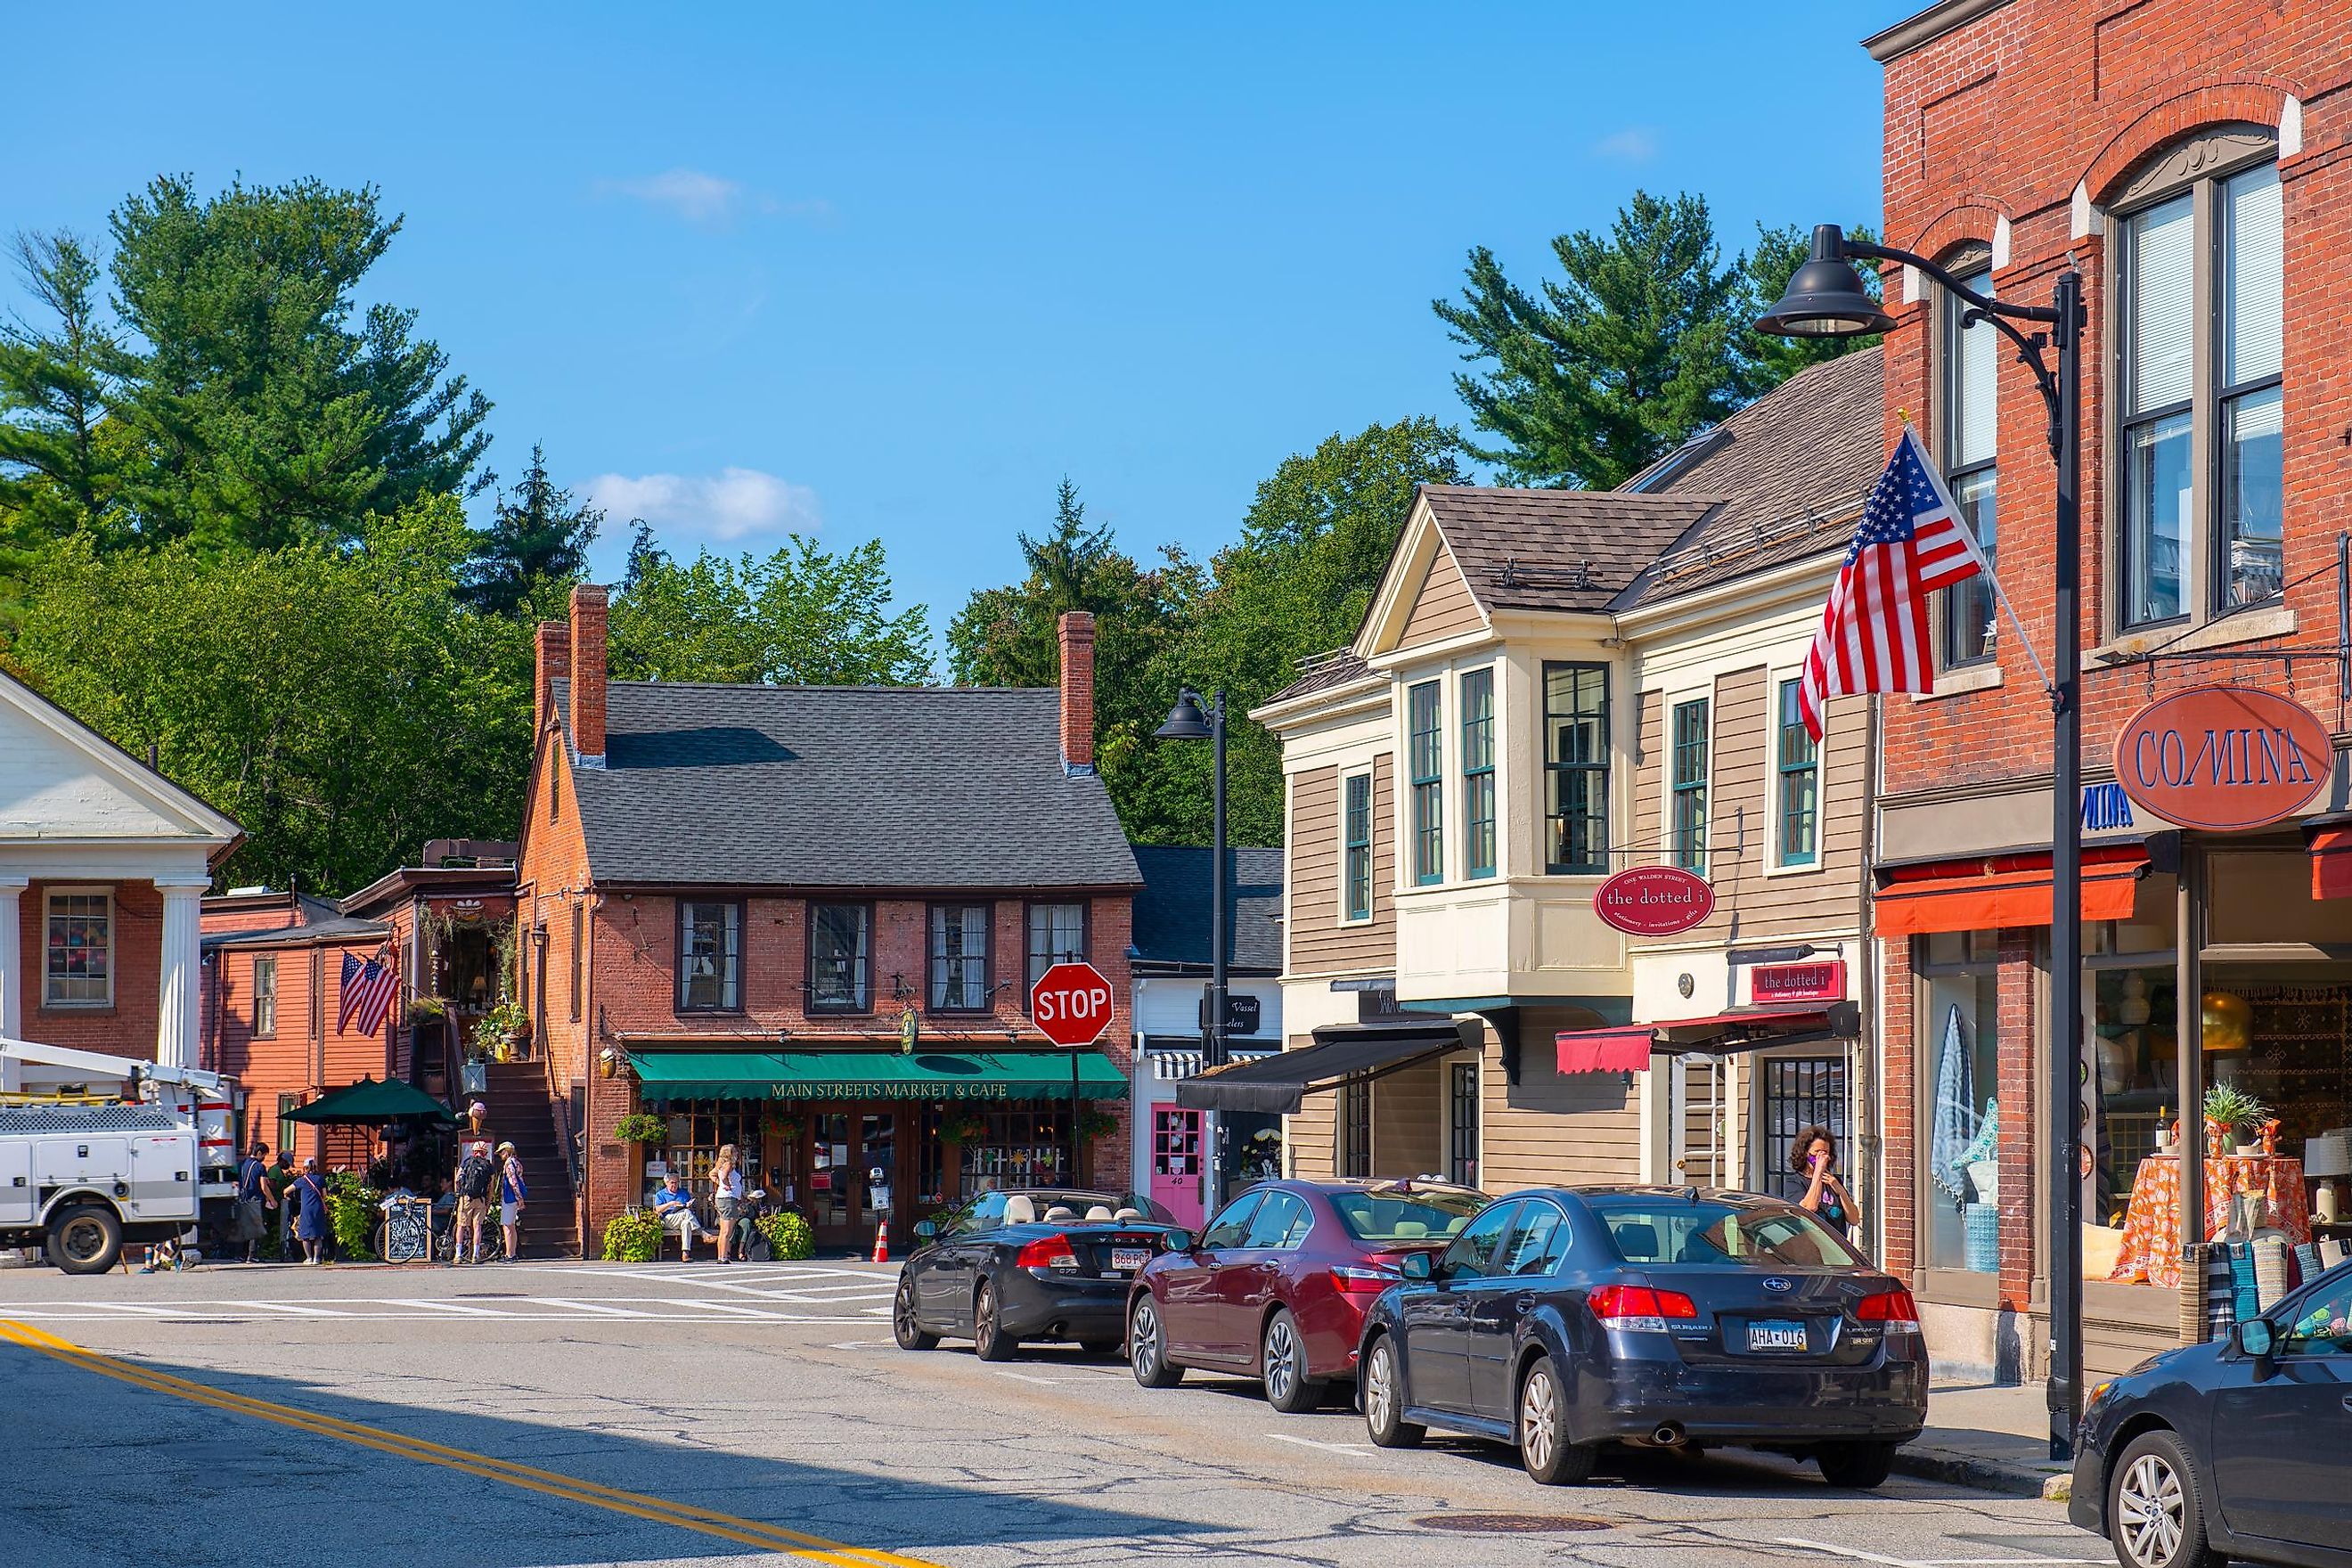 The historic town center of Concord, Massachusetts, USA. Editorial credit: Wangkun Jia / Shutterstock.com